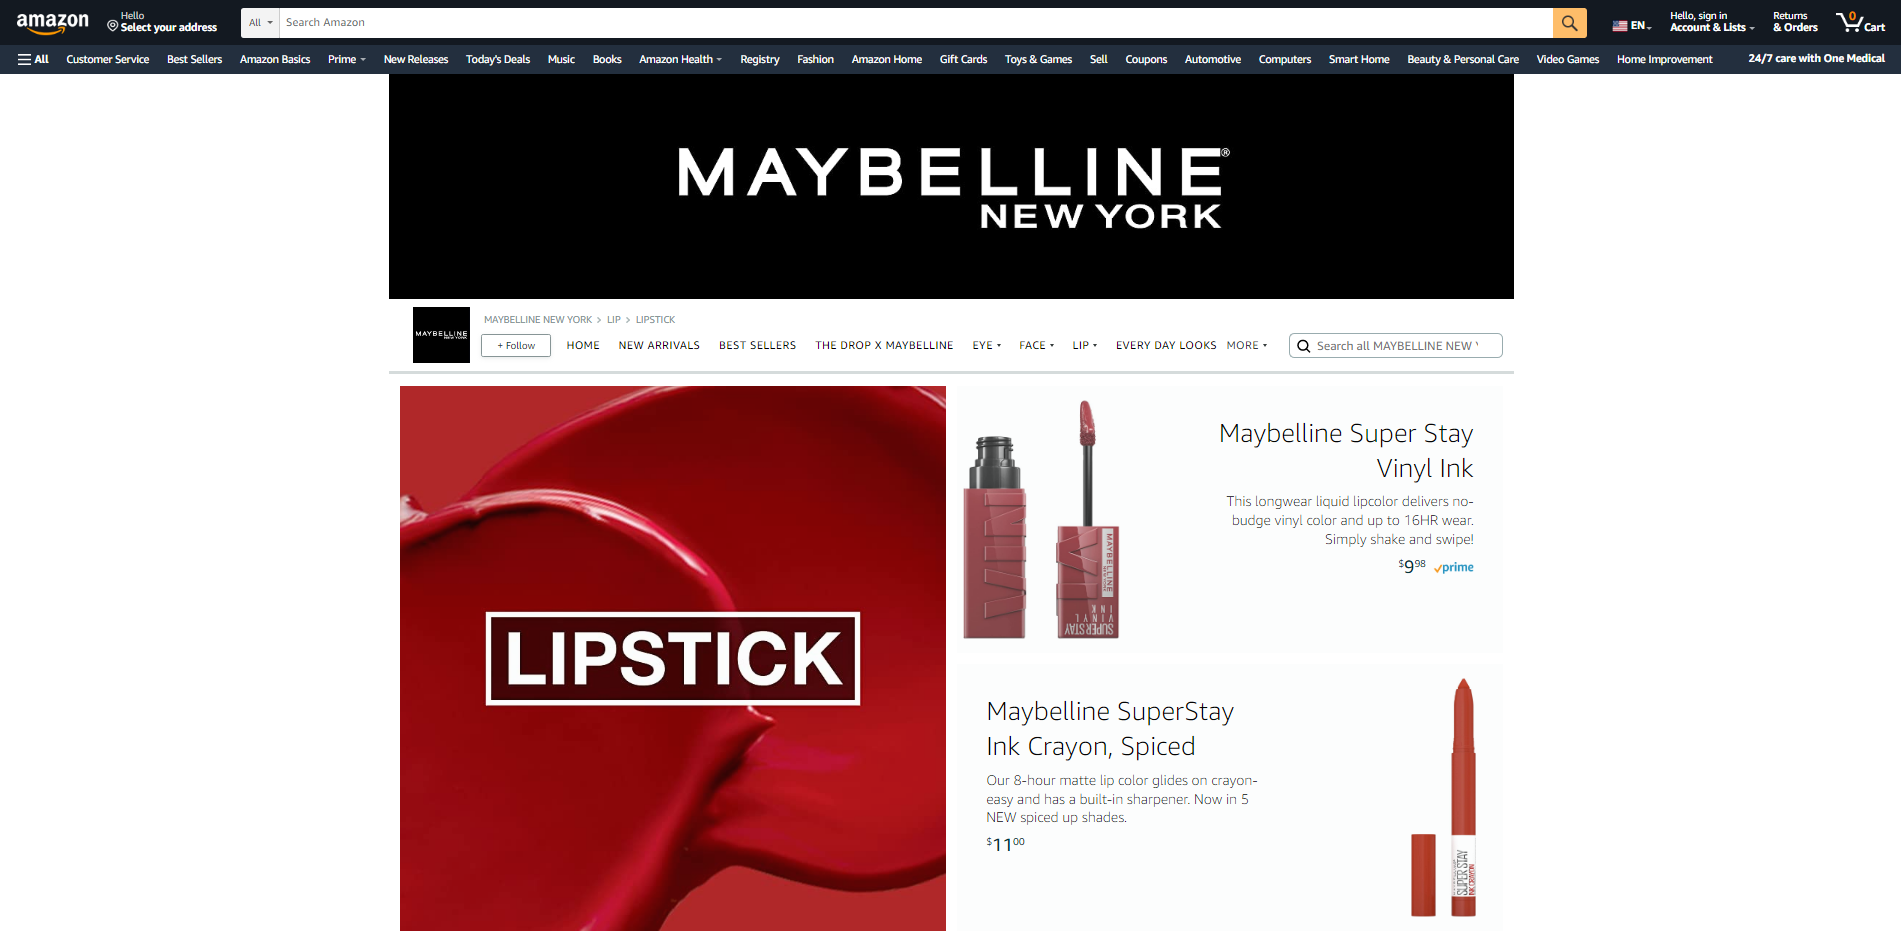 maybelline shopping lipstick homepage on amazon